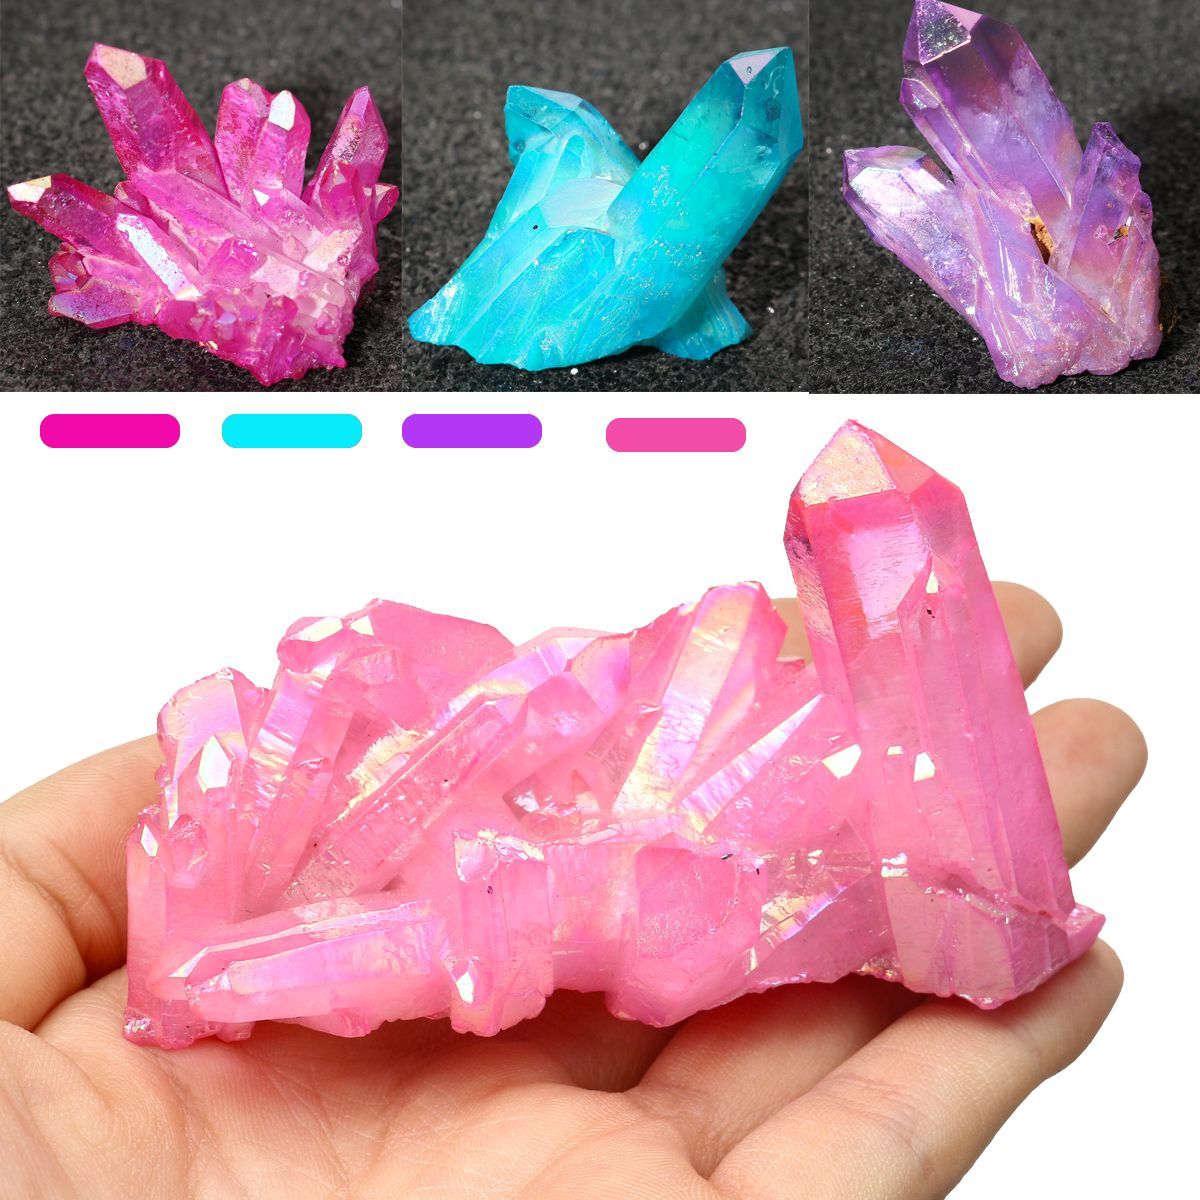 Clear-Quartz-Cluster-Mineral-Specimen-Crystal-Healing-Natural-Home-Decorations-1482462